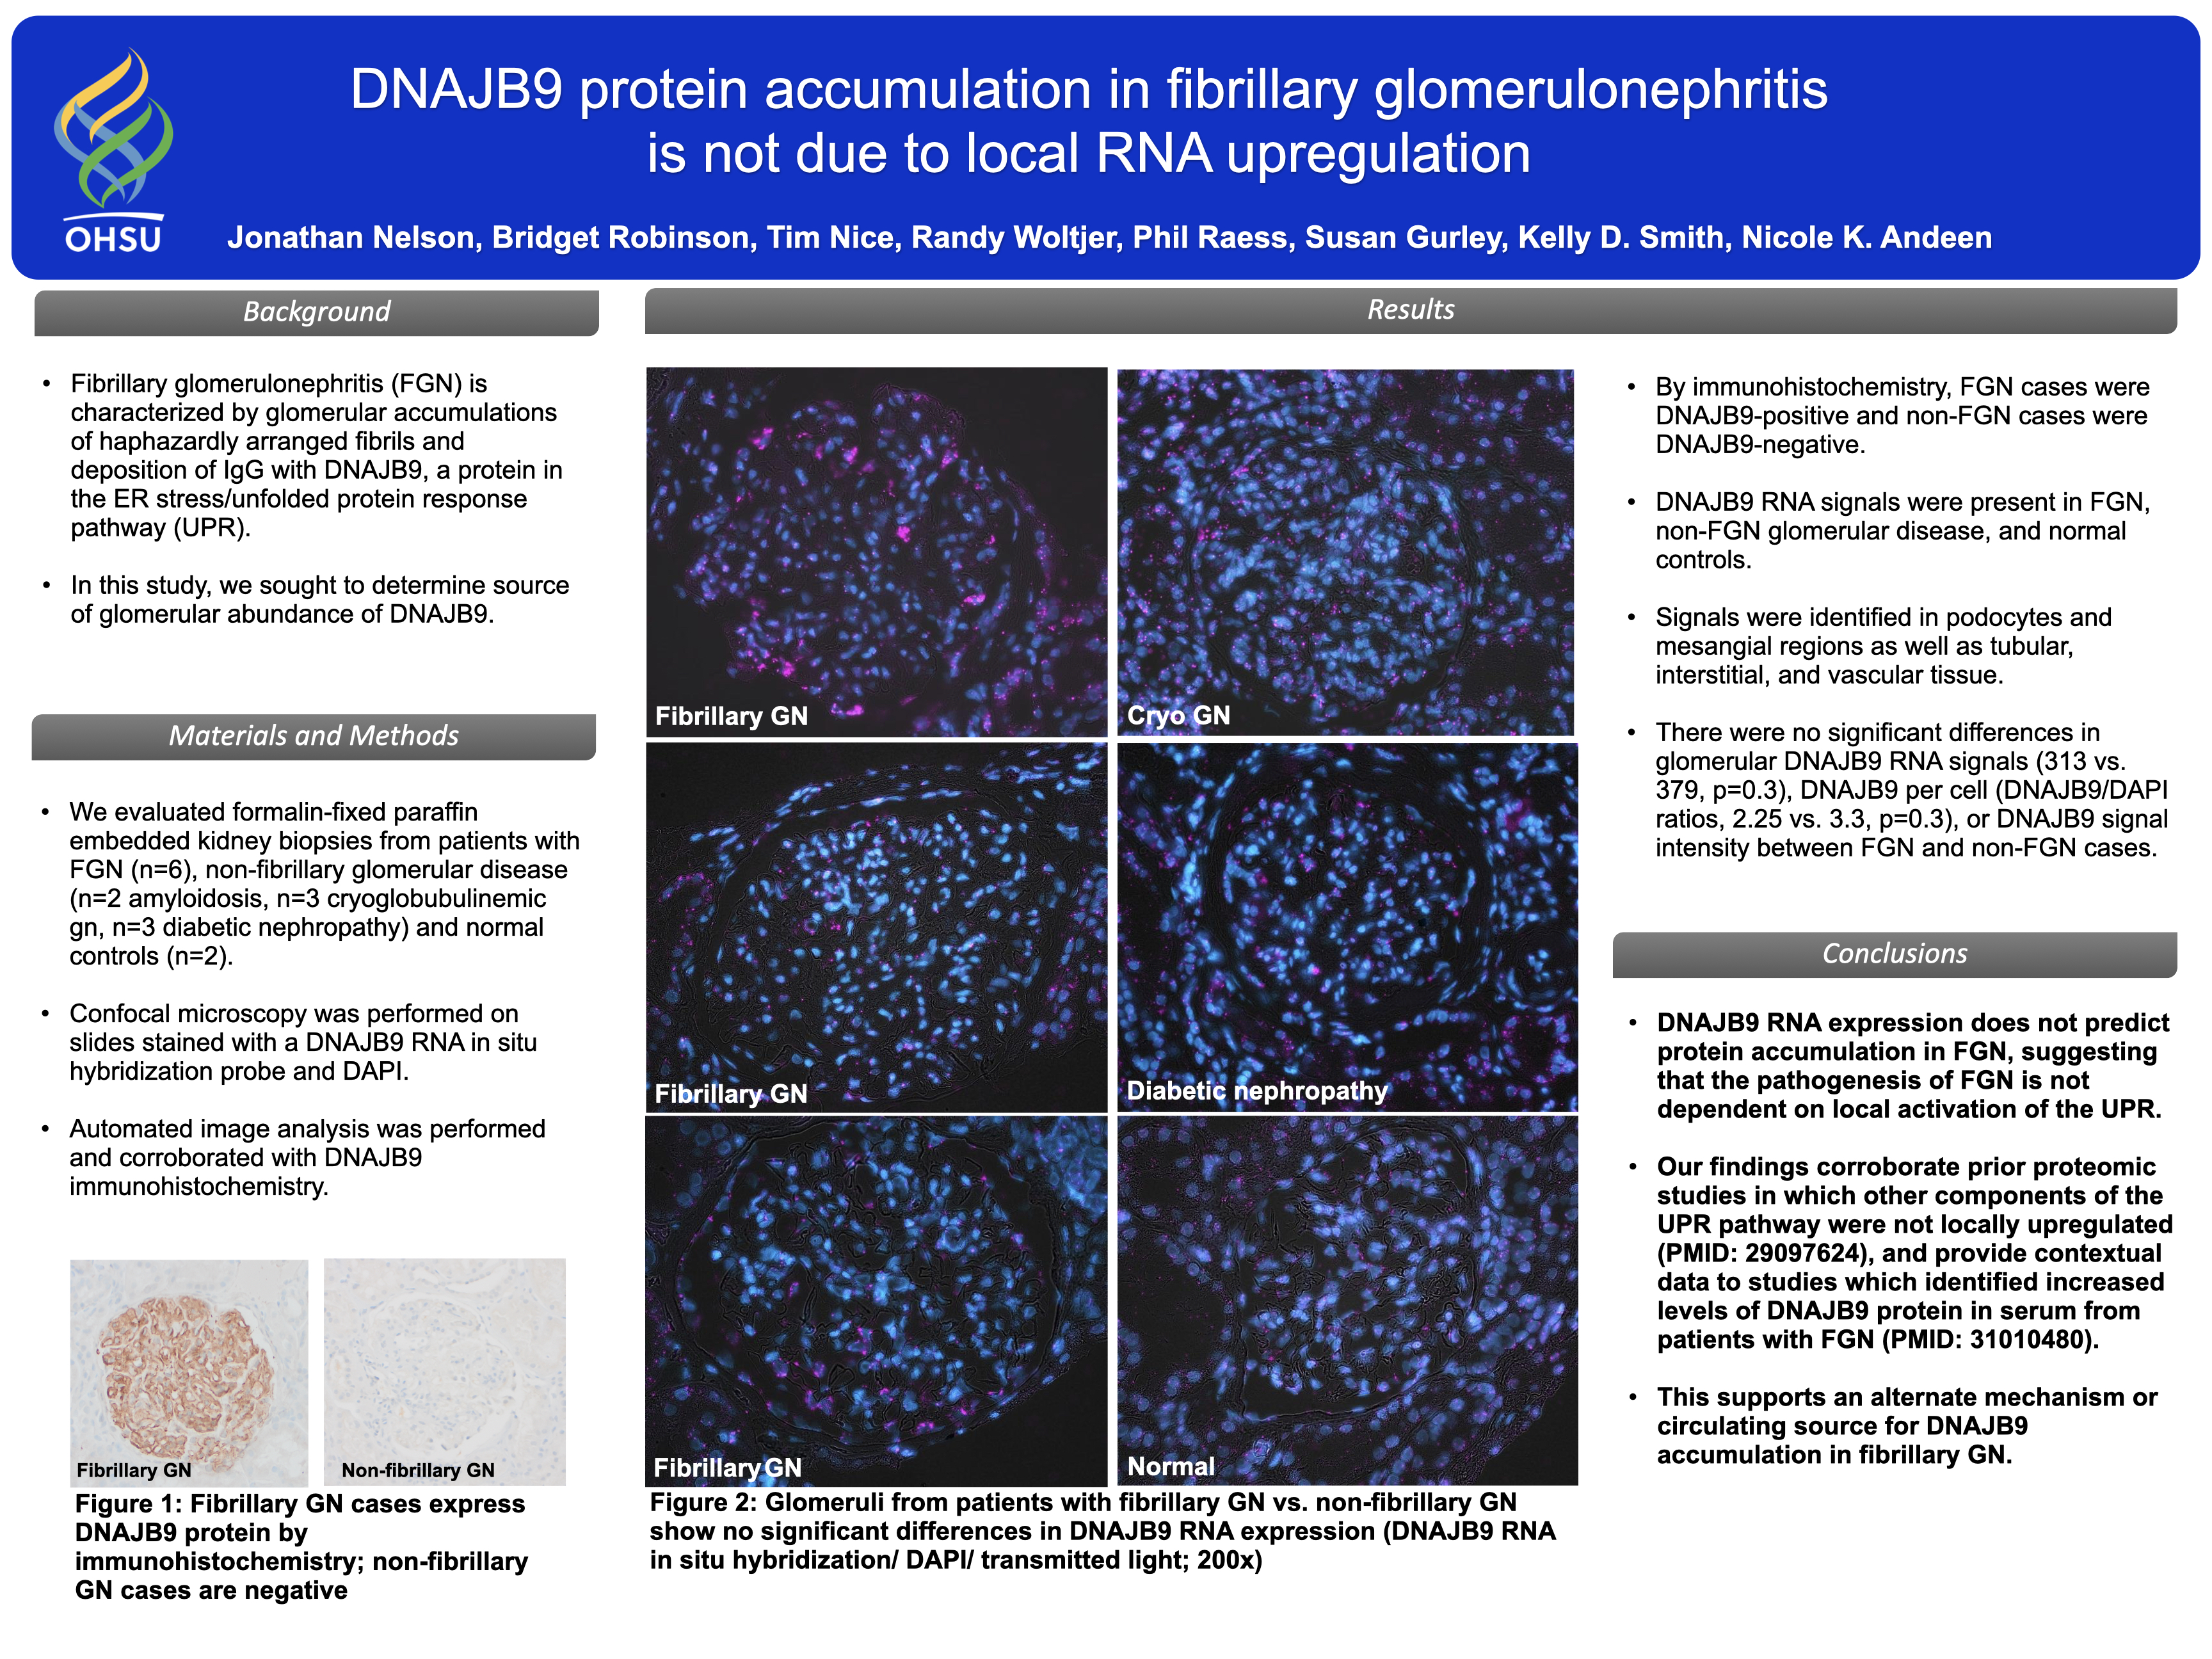 DNAJB9 protein poster